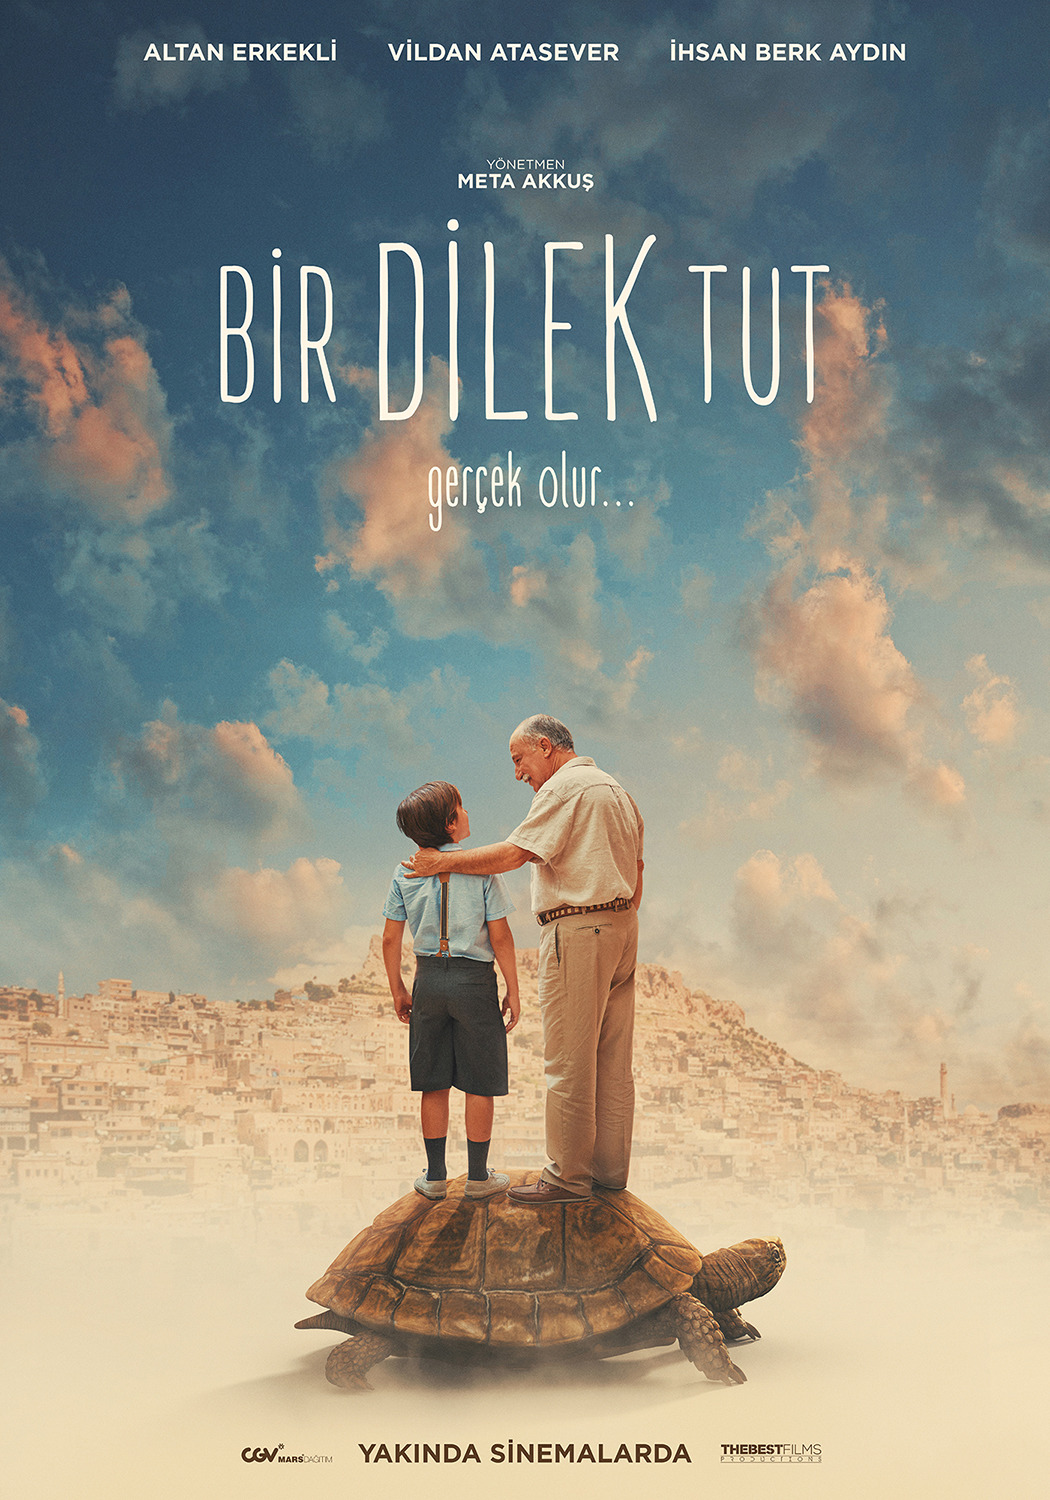 Extra Large Movie Poster Image for Bir Dilek Tut 